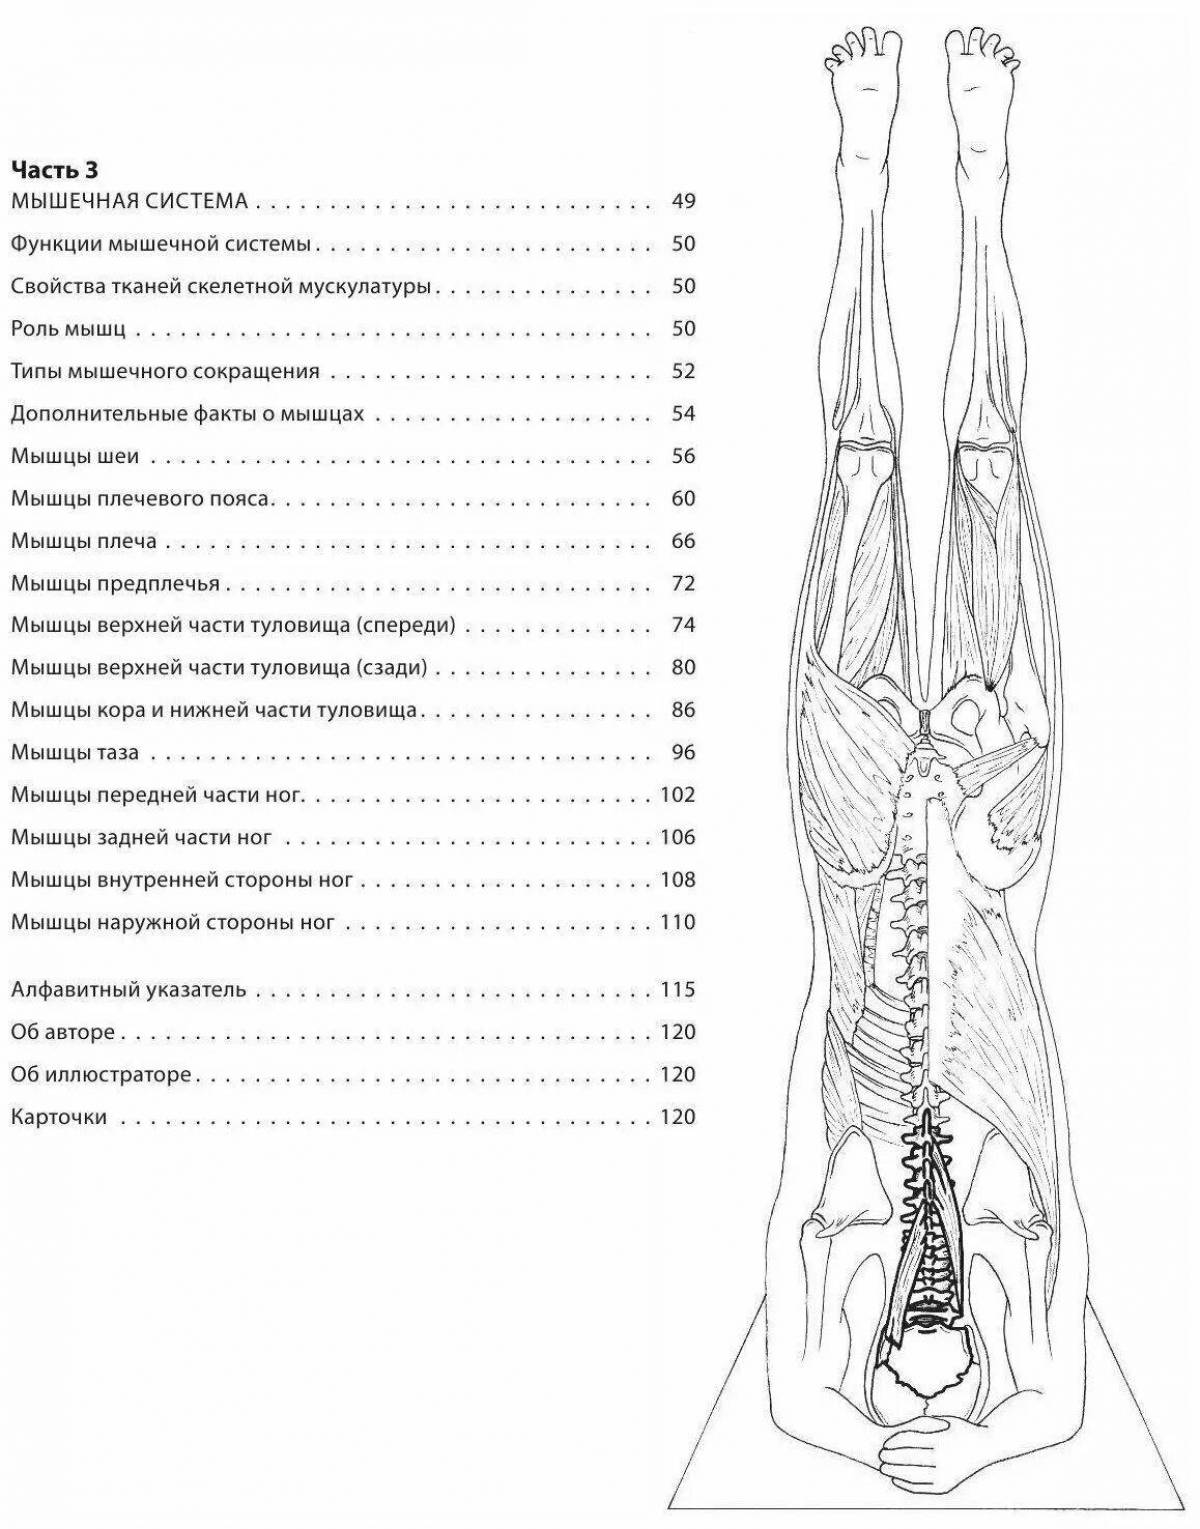 Yoga anatomy atlas #4